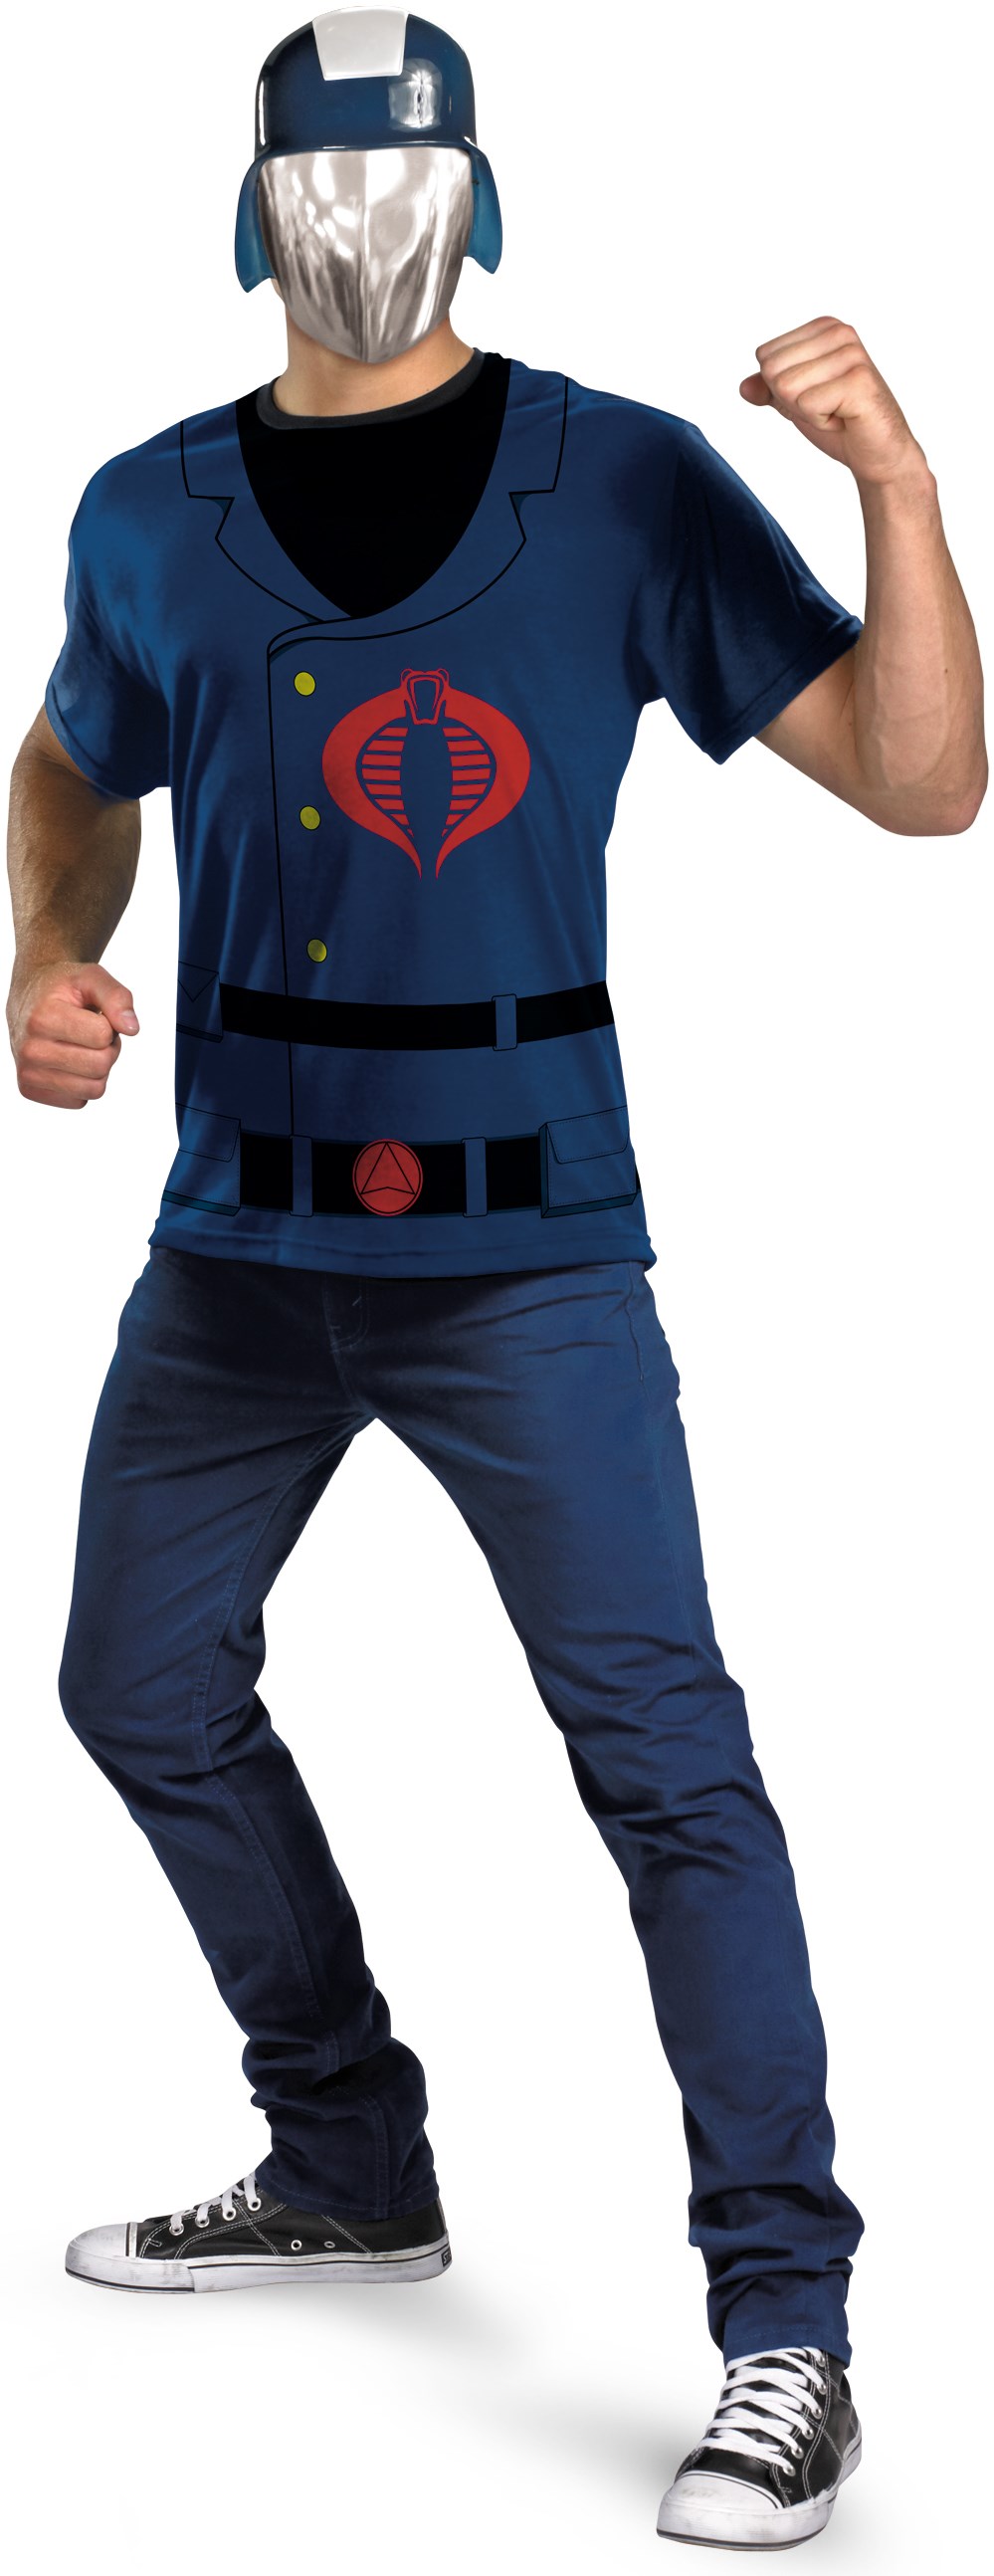 G.I. Joe - Cobra Commander Adult Costume Kit